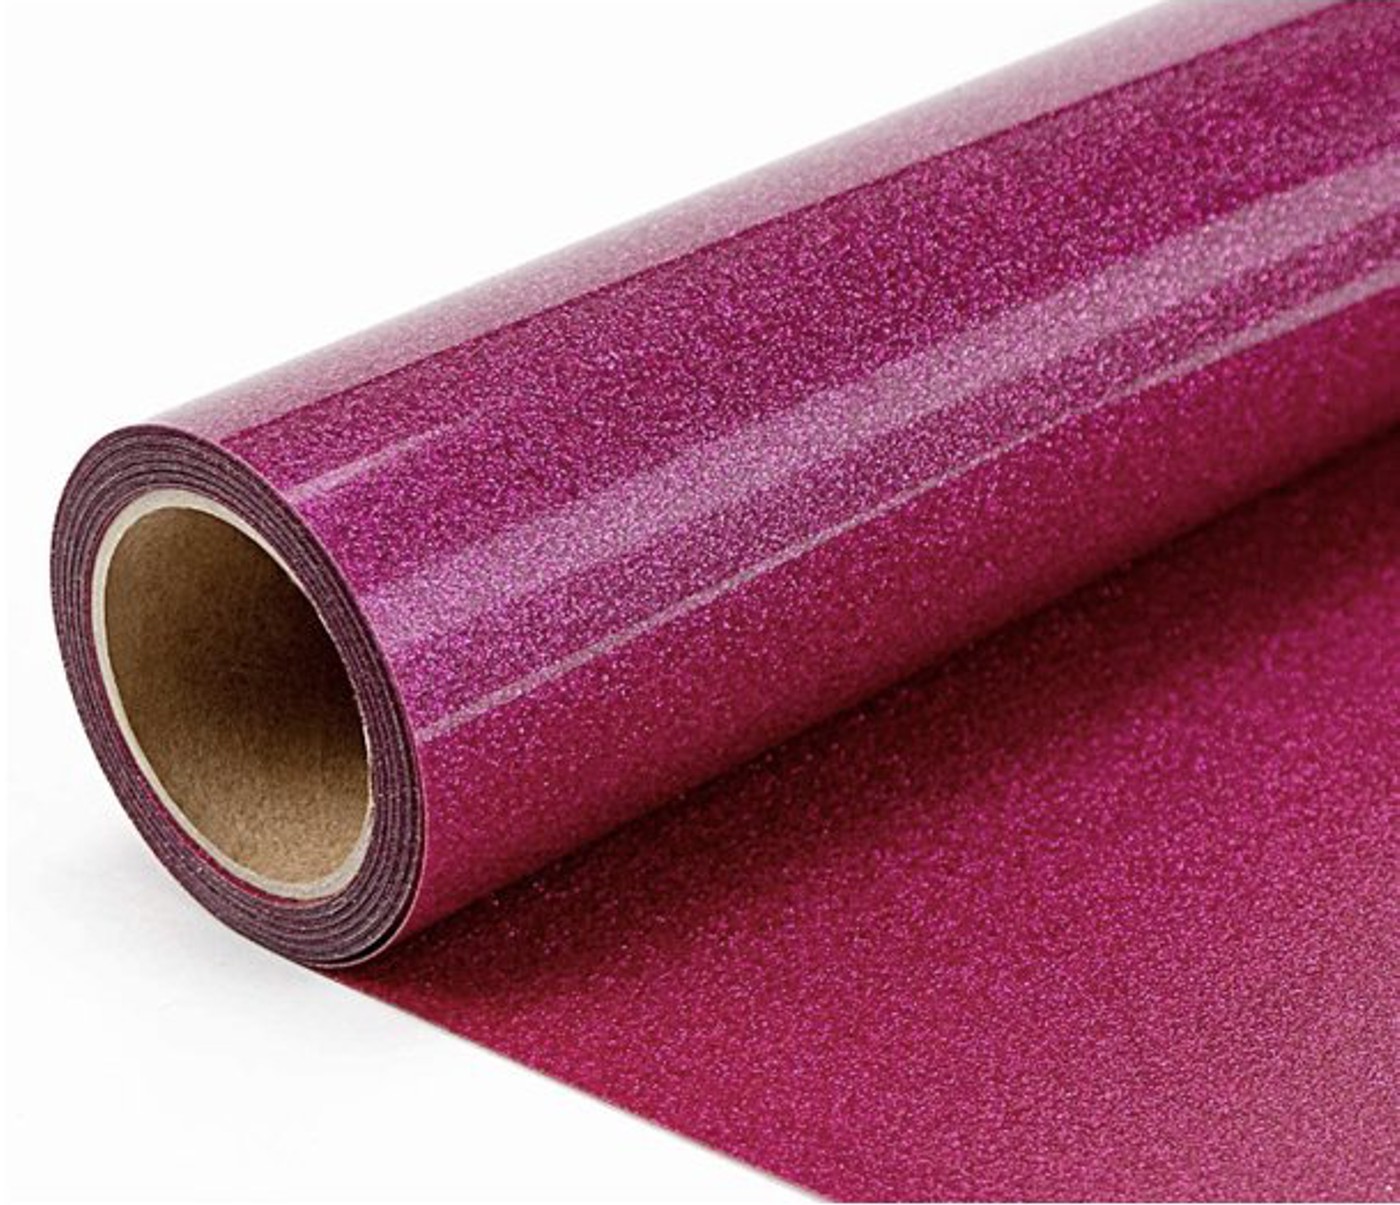 Power PU Glitter - Termocolante Glitter Pink - 24 cm